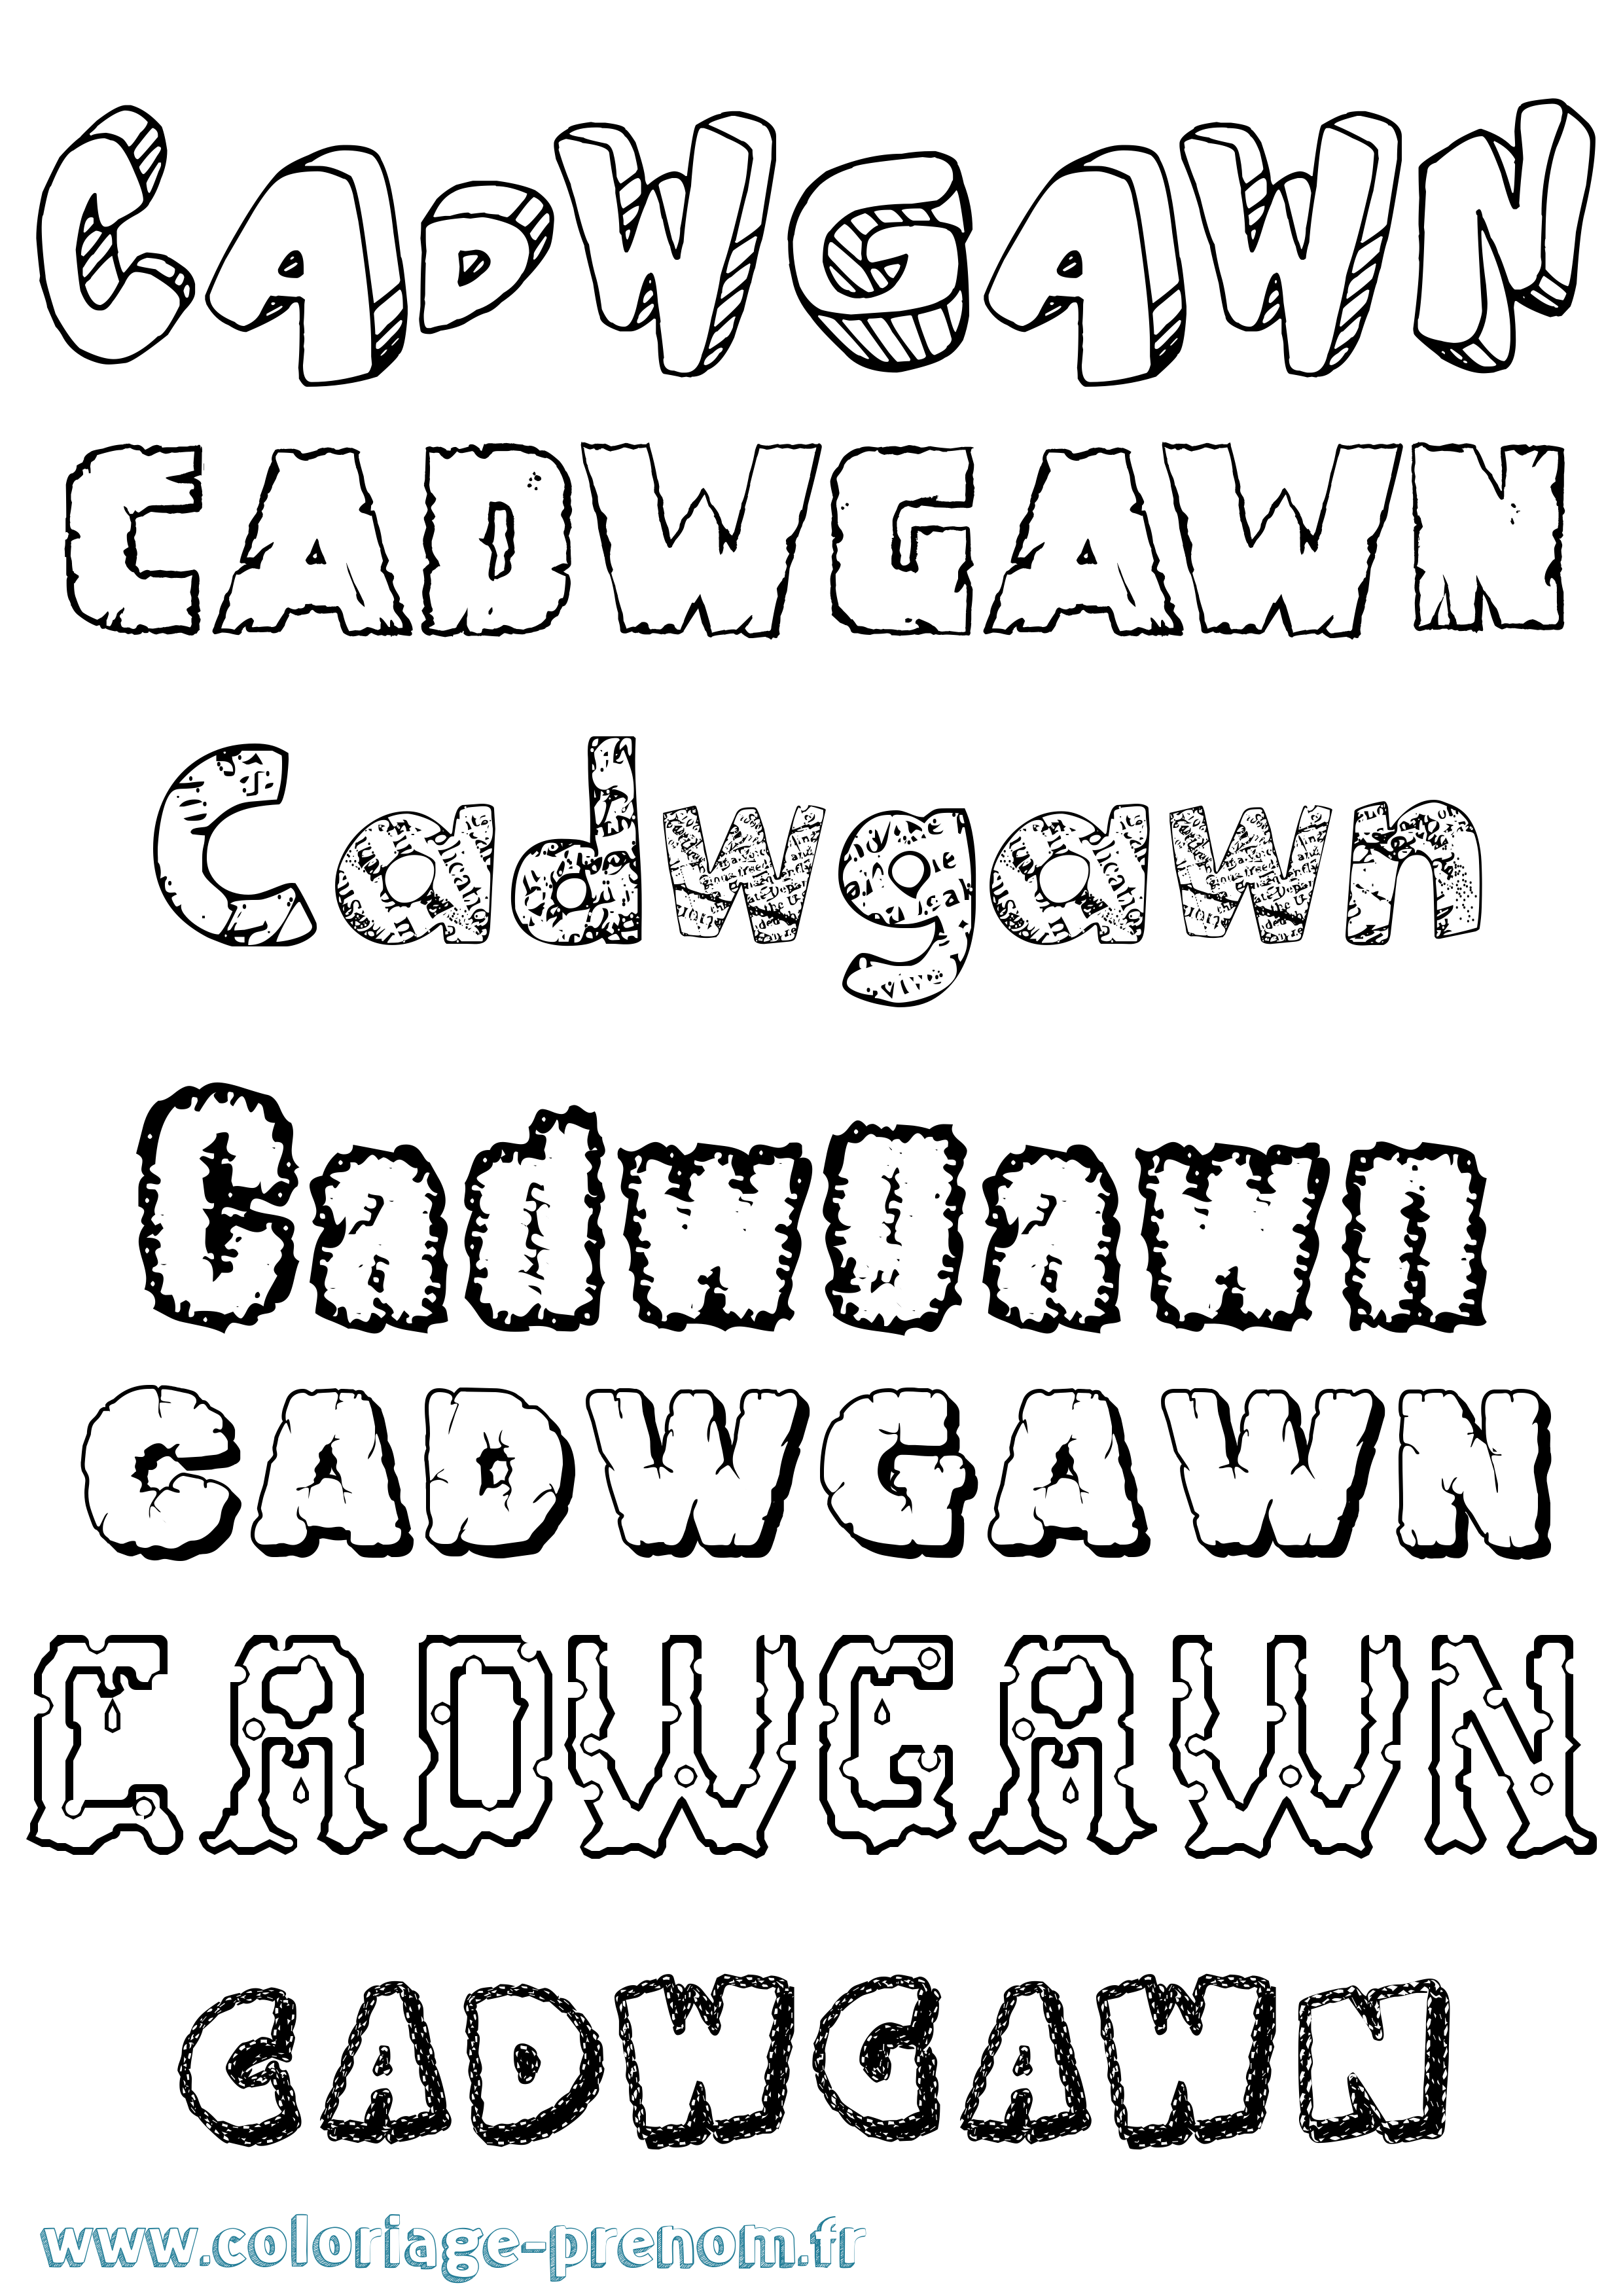 Coloriage prénom Cadwgawn Destructuré